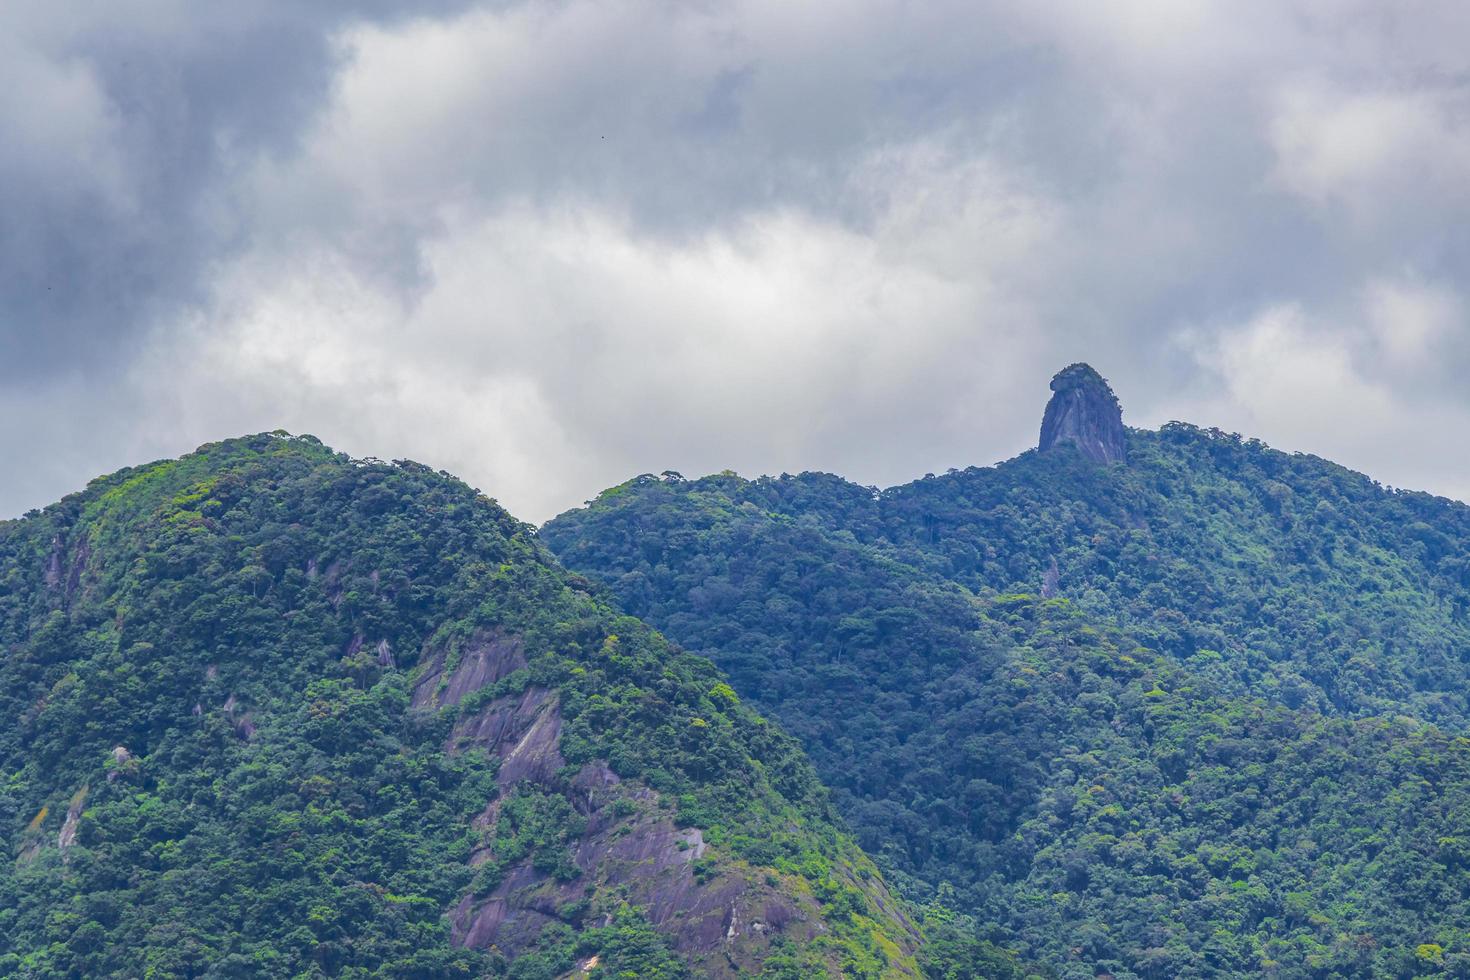 abraao montagne pico do papagaio avec nuages ilha grande brésil. photo